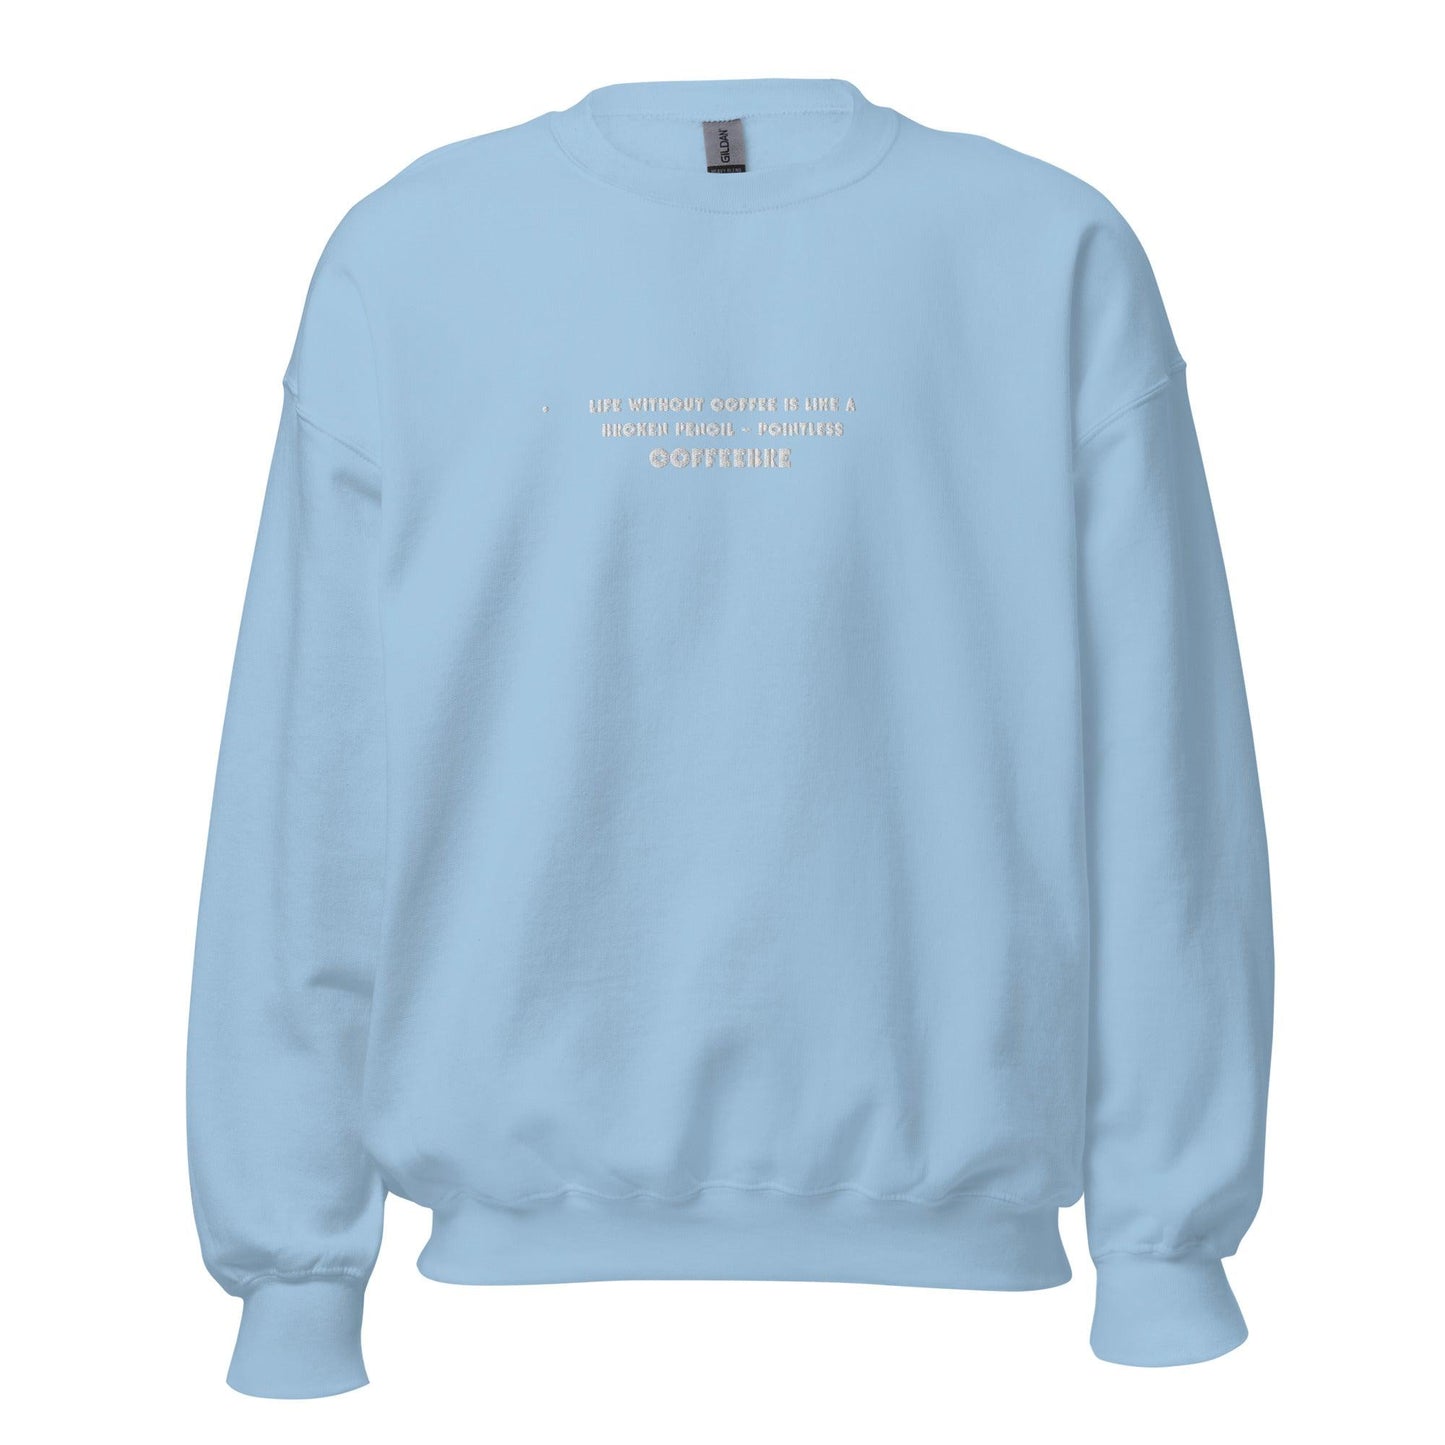 Embroidered Gym Unisex Sweatshirt - COFFEEBRE